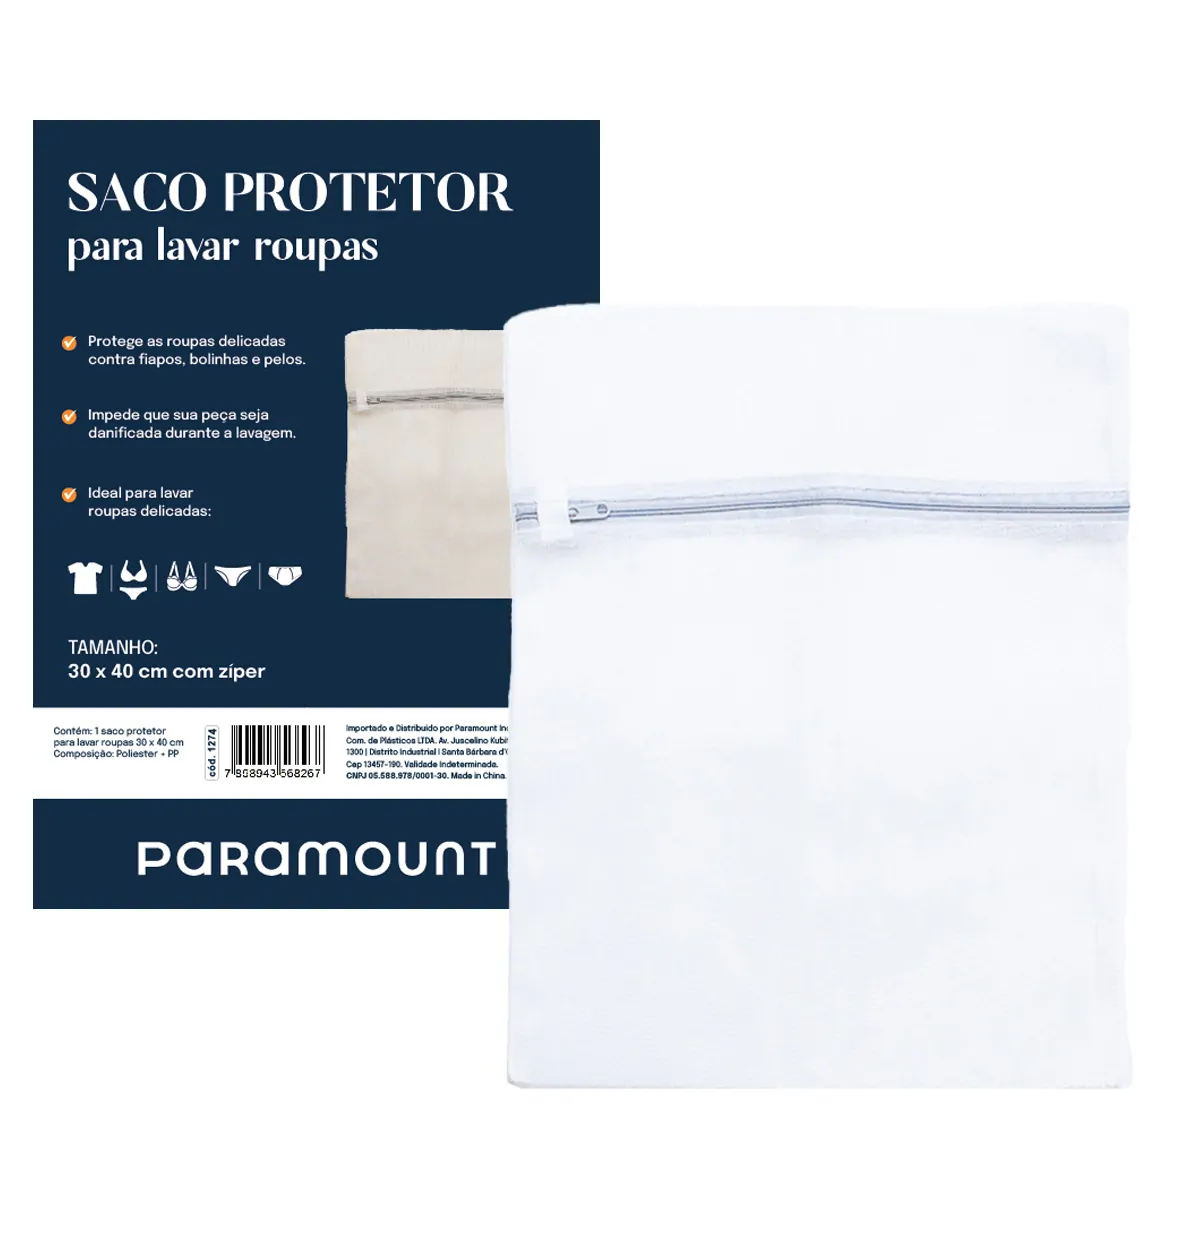 Saco Protetor p/ Lavar Roupas